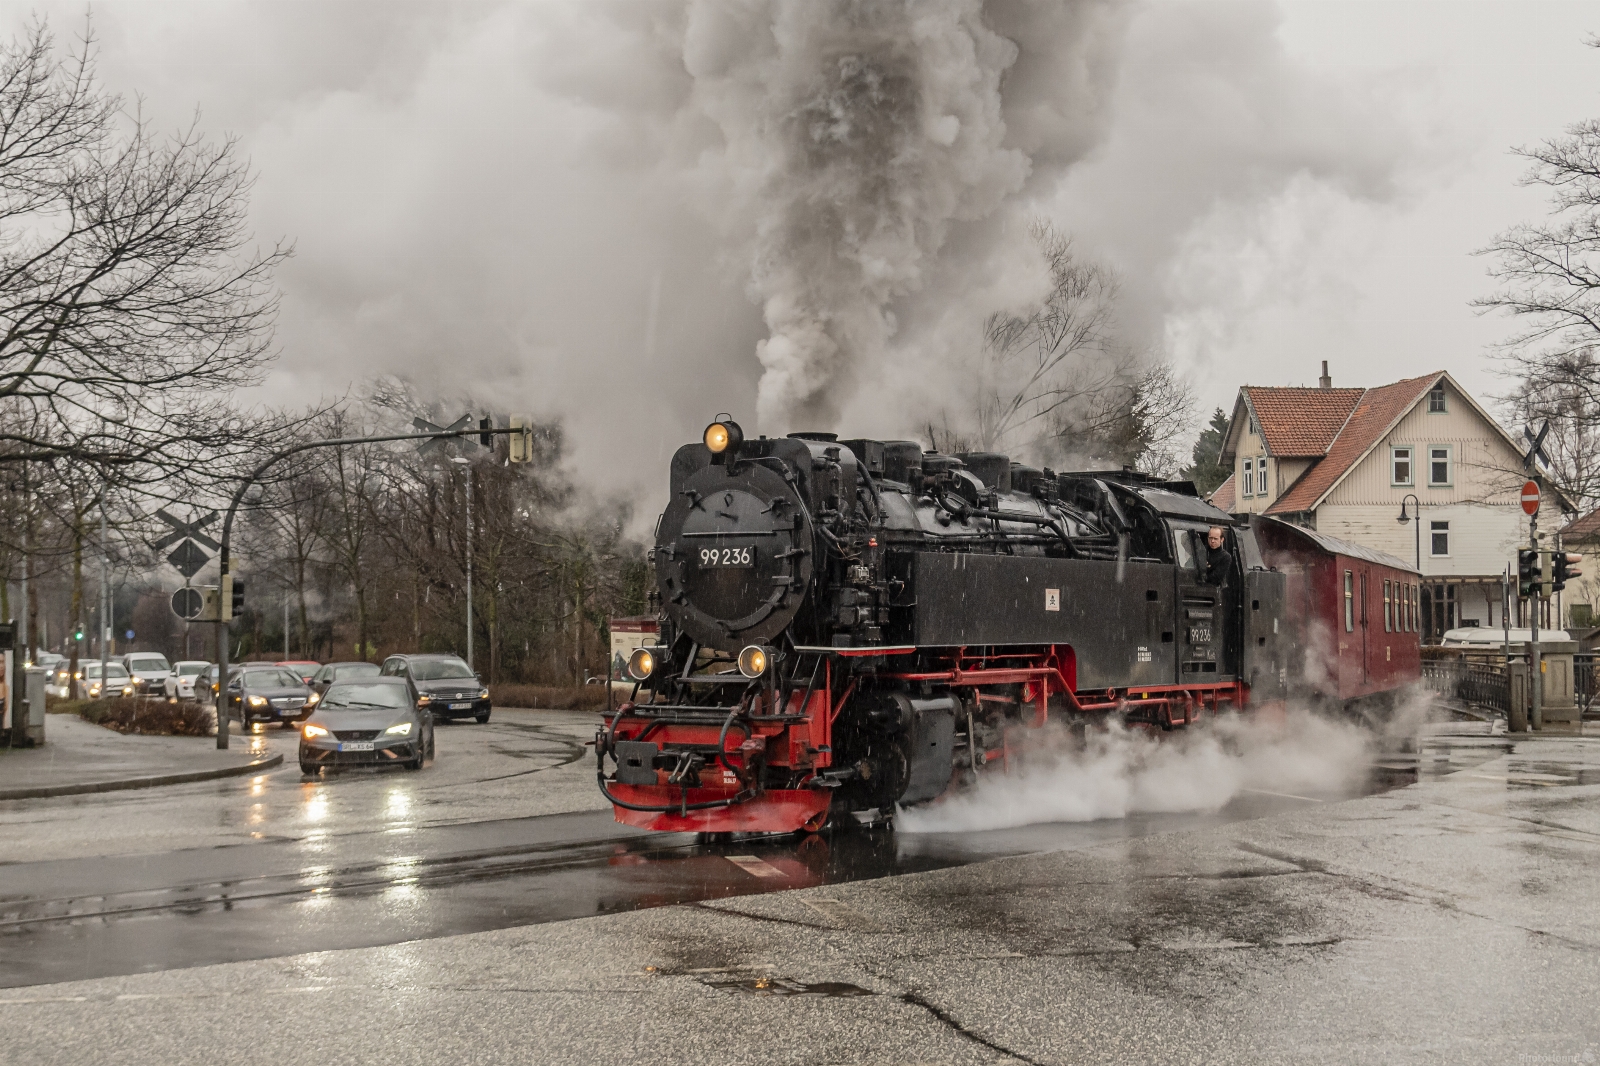 Image of Harz Mountain Railway by Steven Godwin